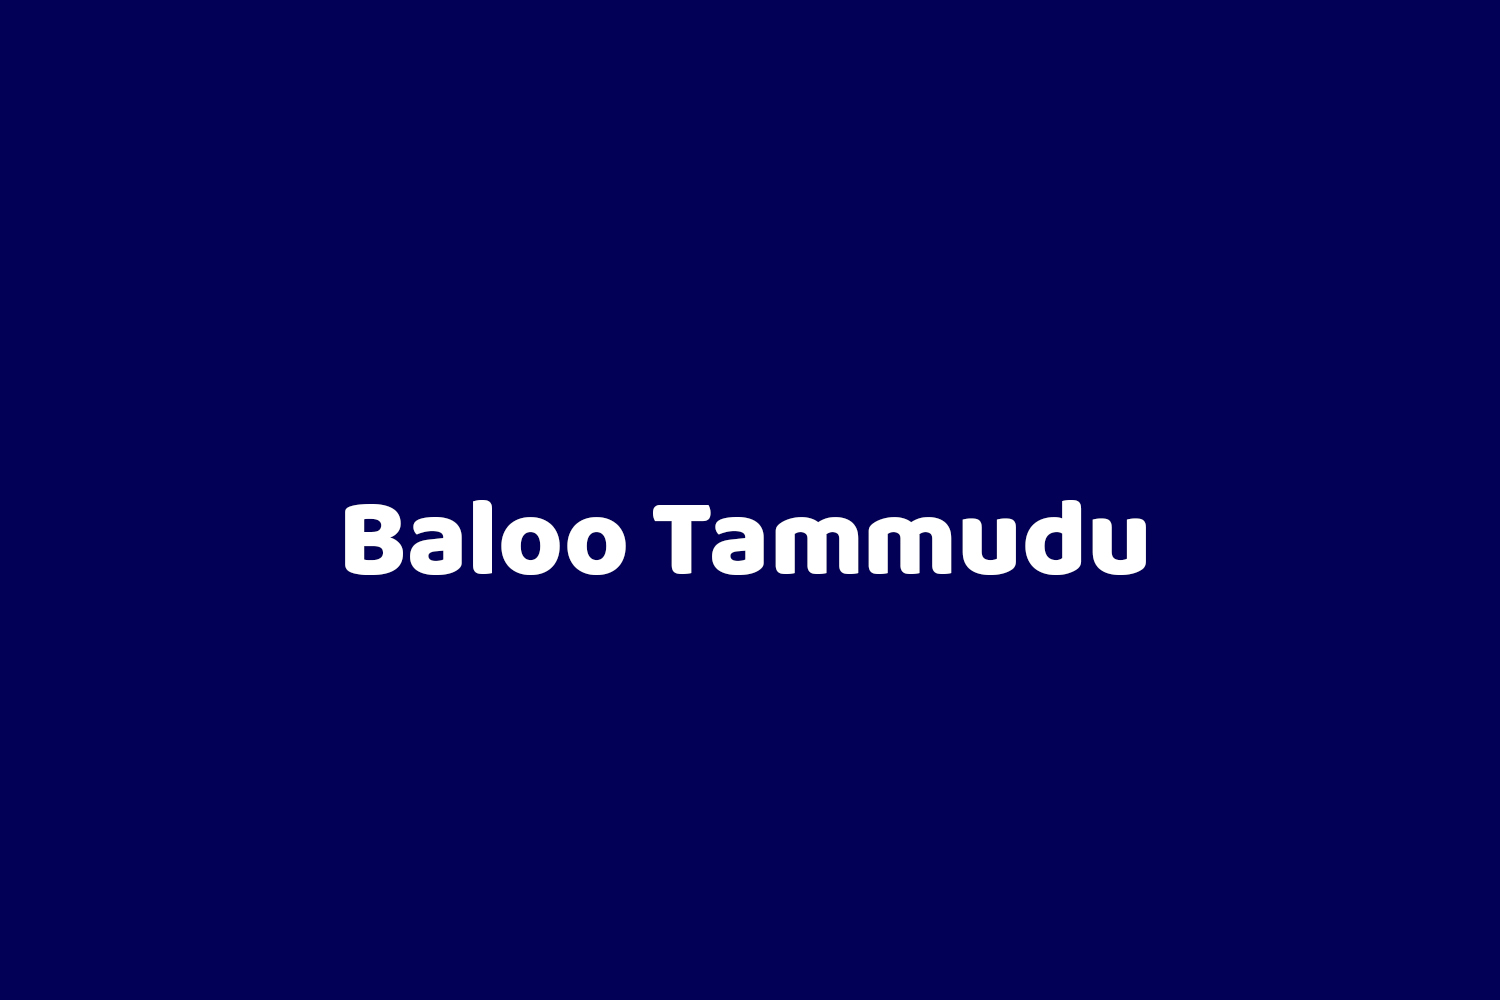 Baloo Tammudu